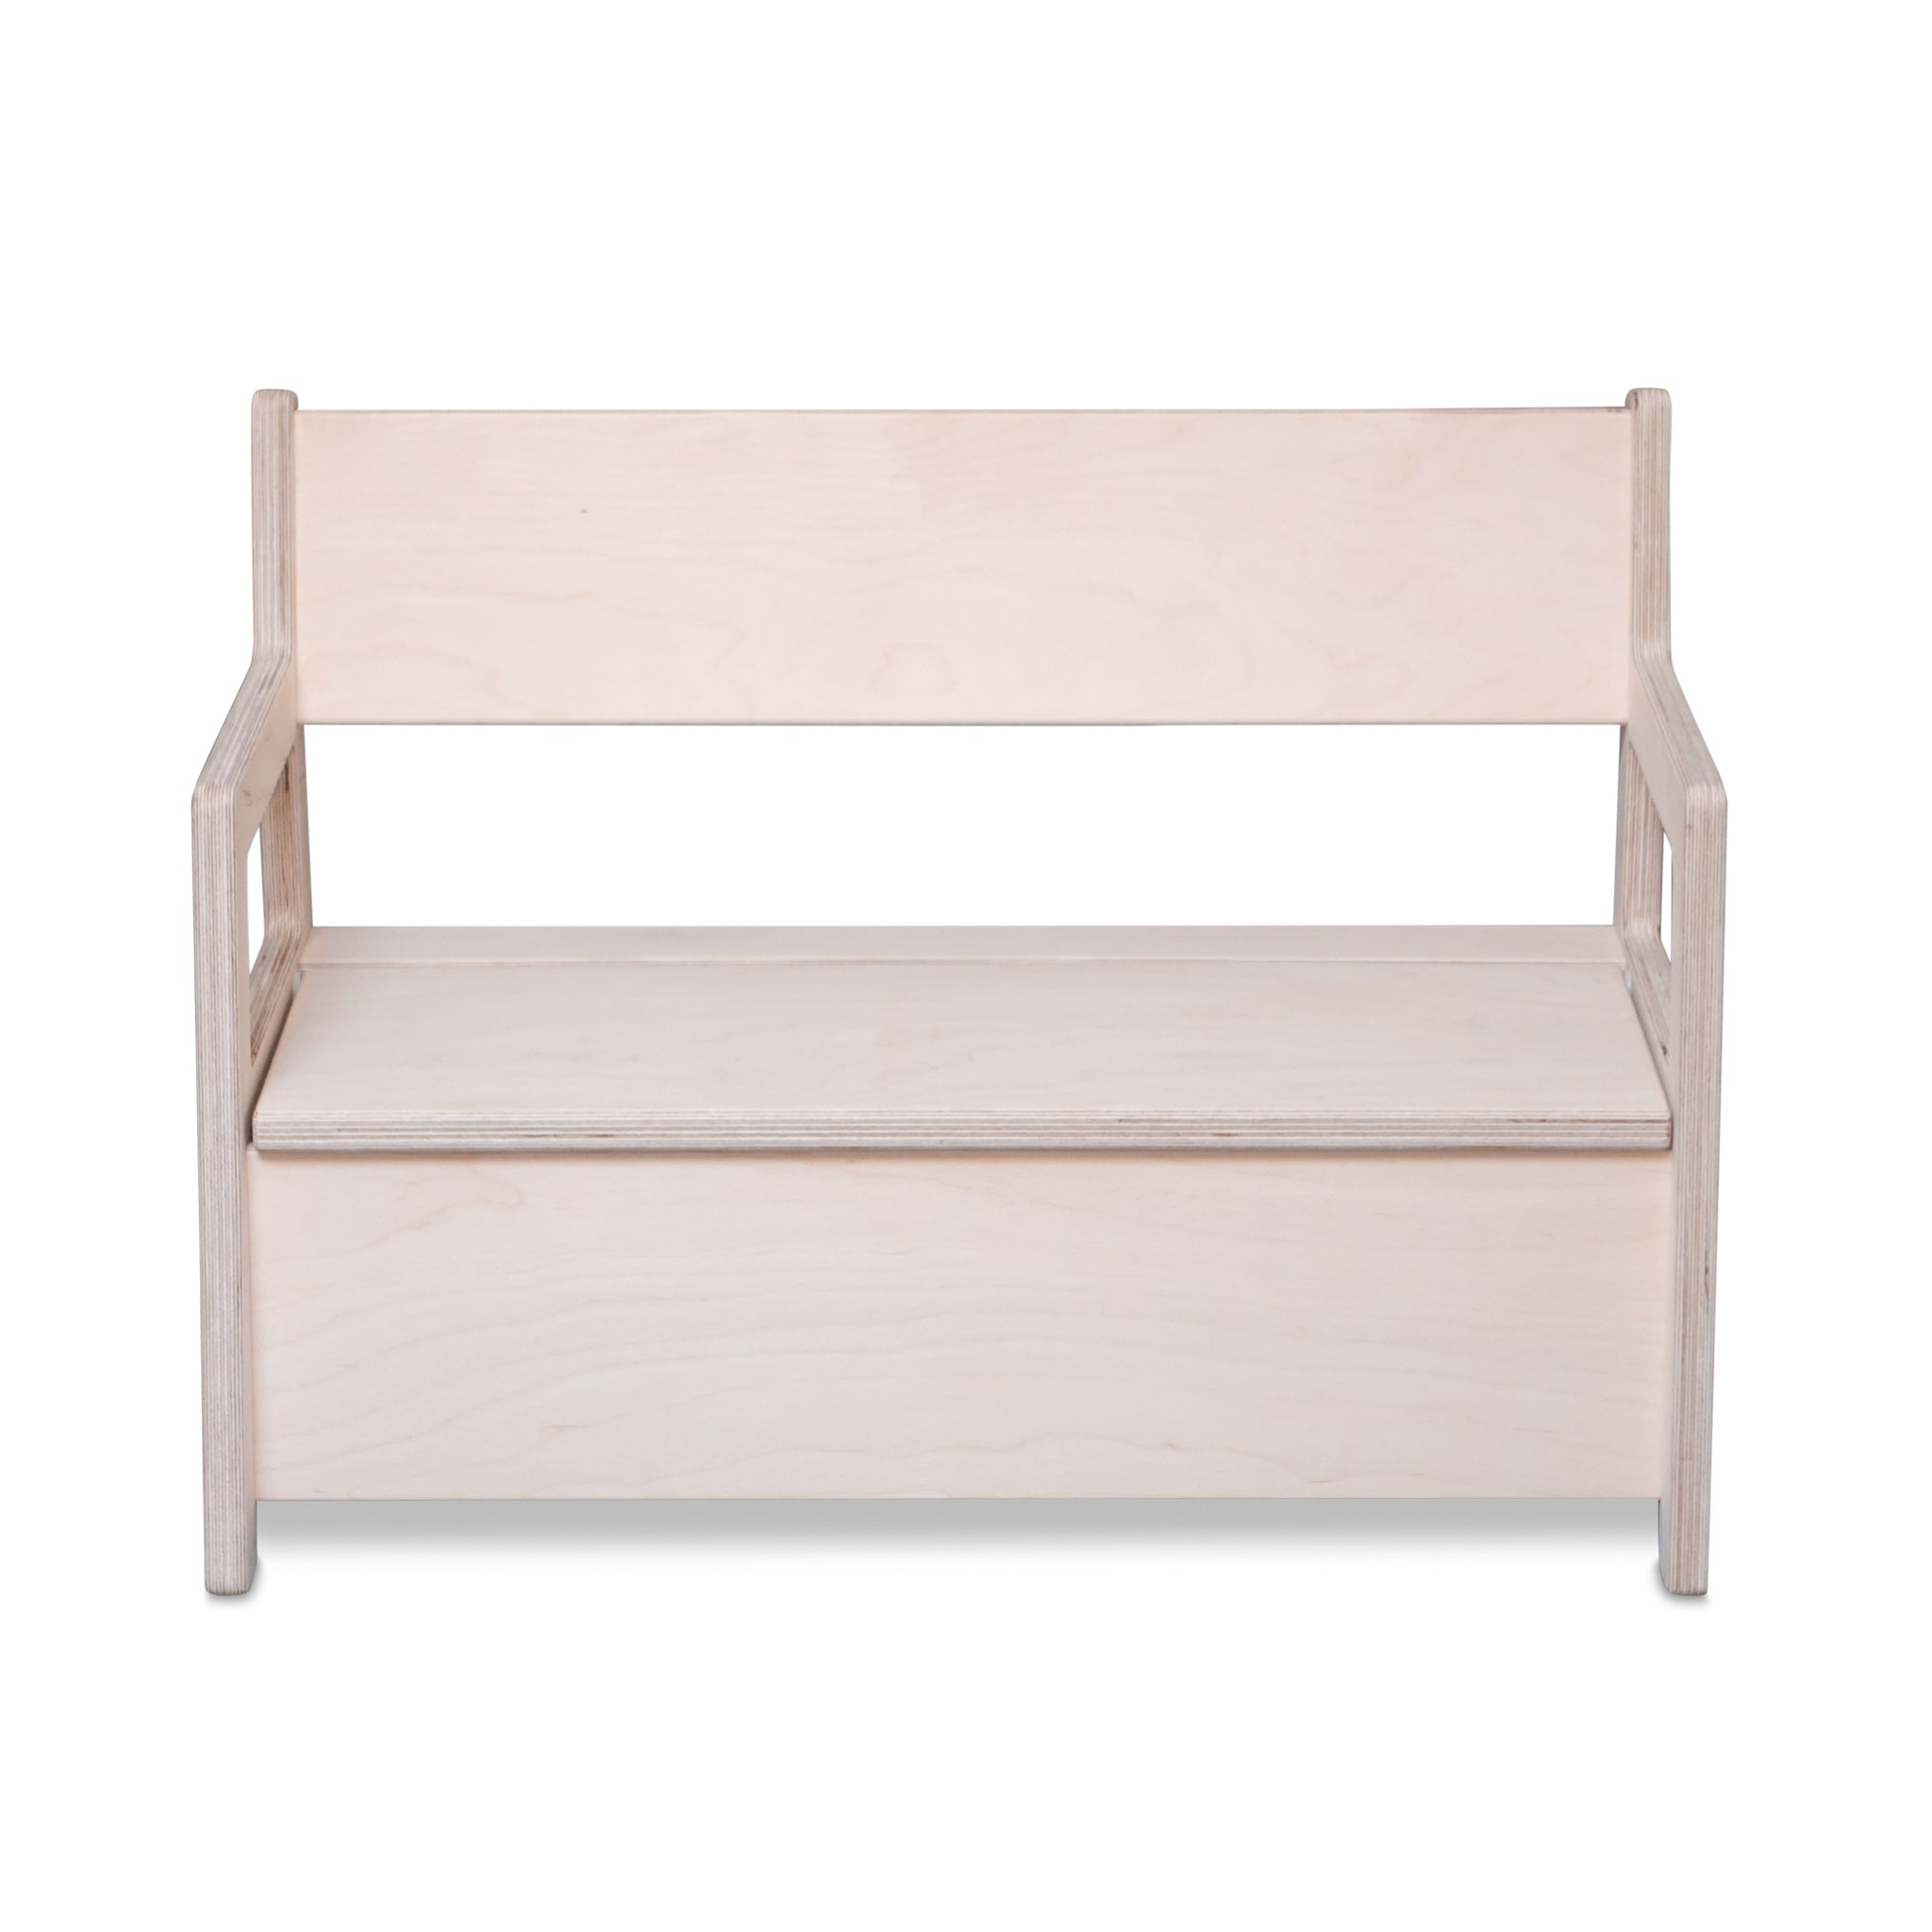 Little flap bench, toy bench | wooden toy box, Storage bench - toddie.com